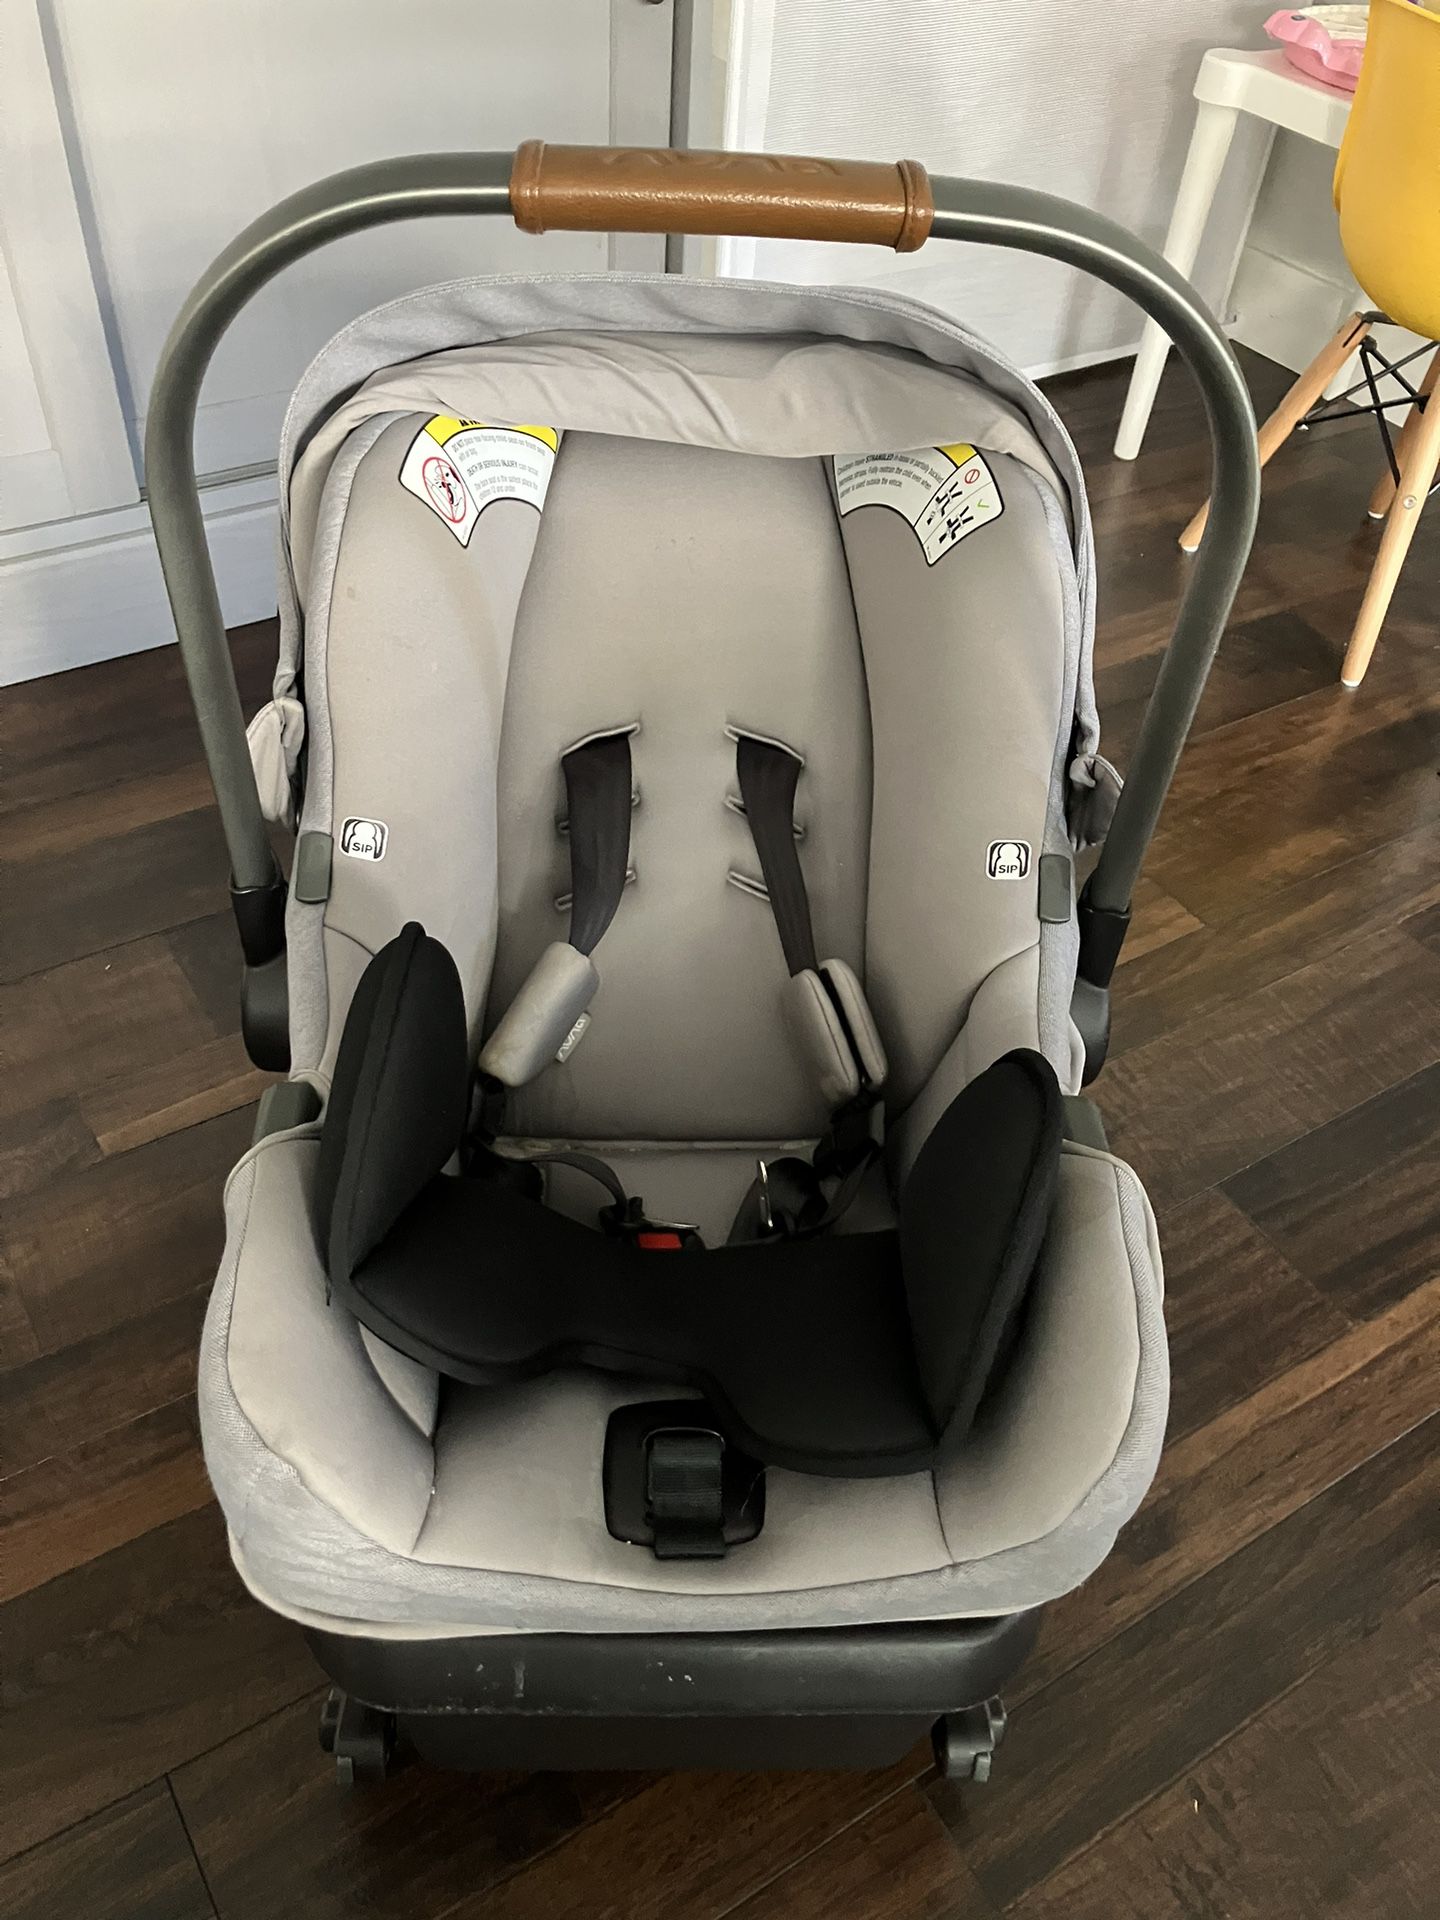 Nuna PIPA Infant Car Seat And Base 